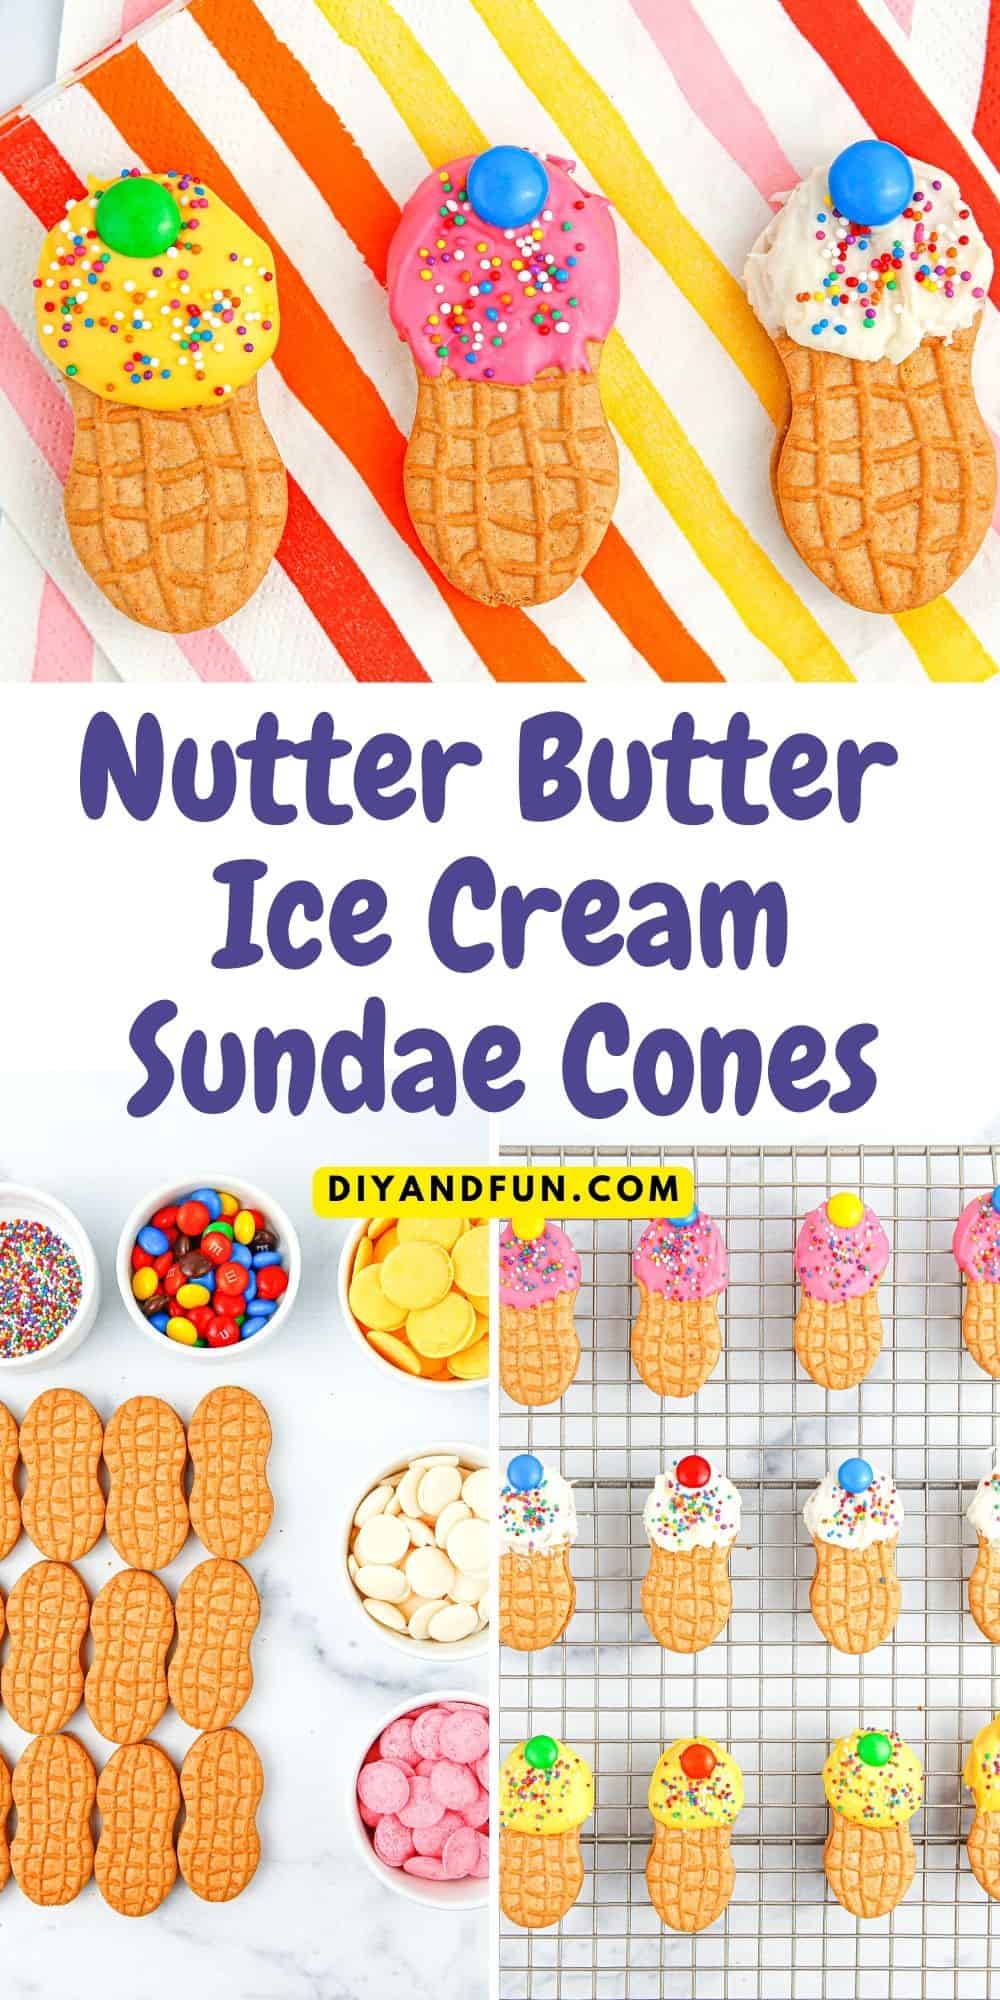 Nutter Butter Ice Cream Sundae Cones, a simple recipe DIY idea for decorating a peanut shaped cookie to look like an ice cream sundae.